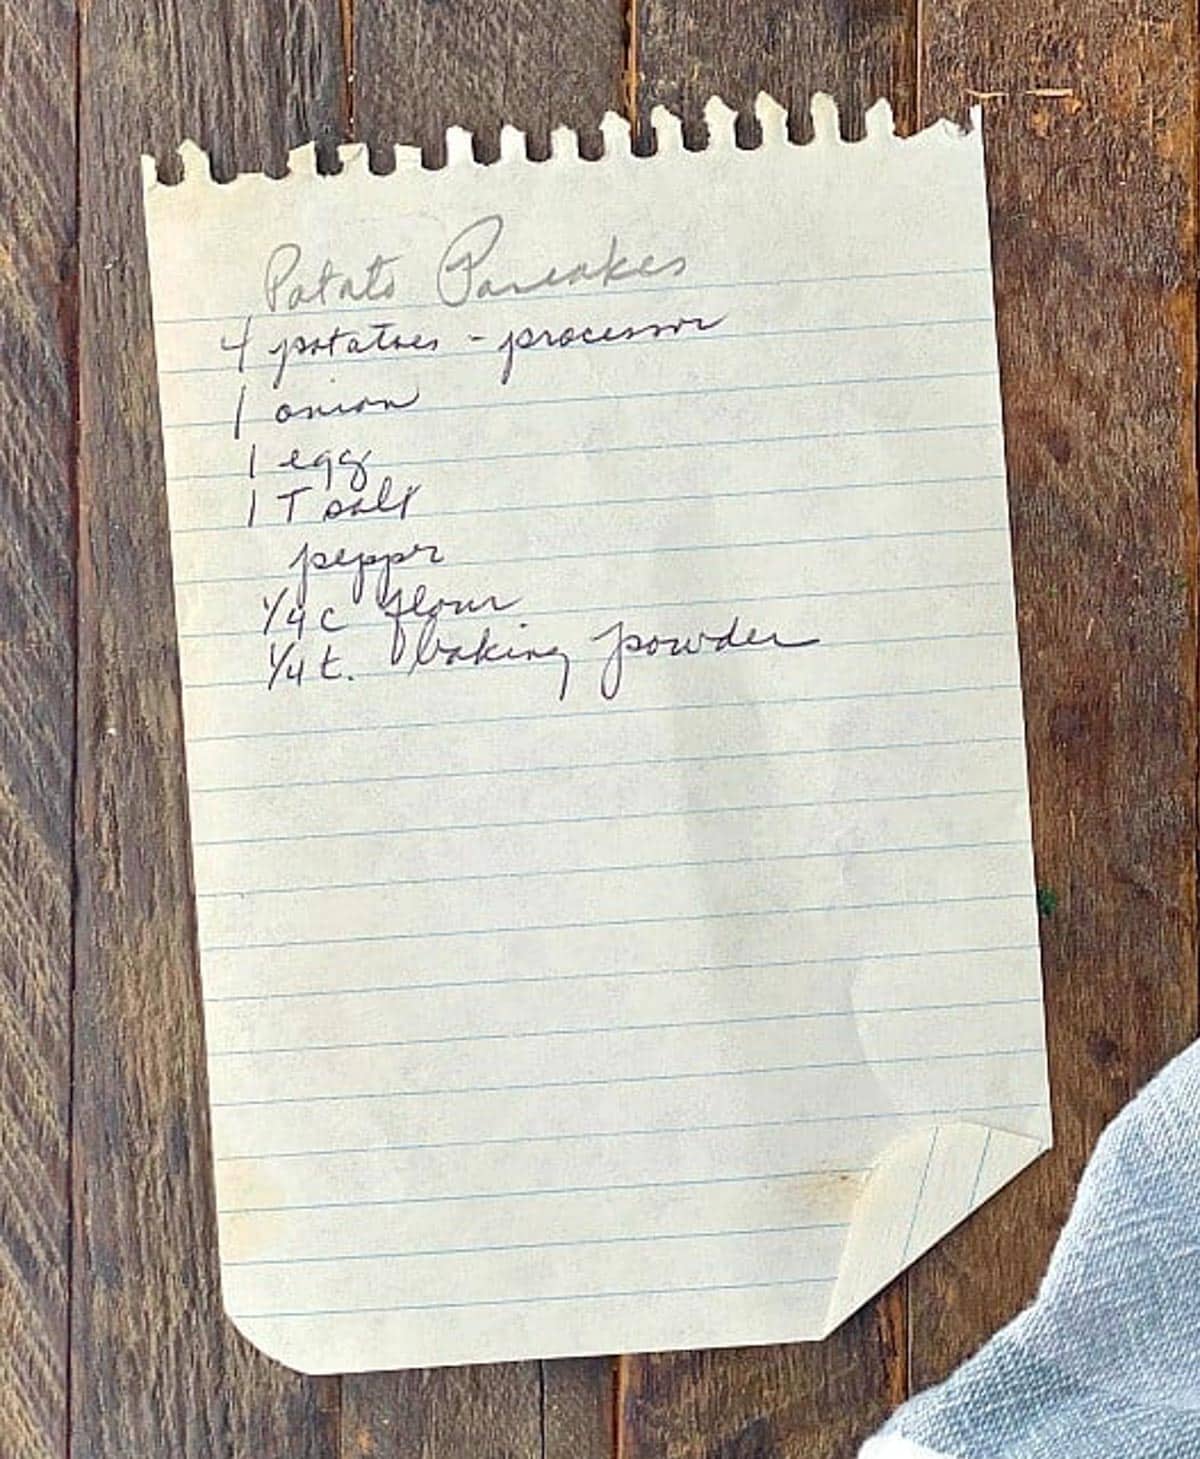 Great grandmother's potato pancake recipe handwritten on a sheet of paper.